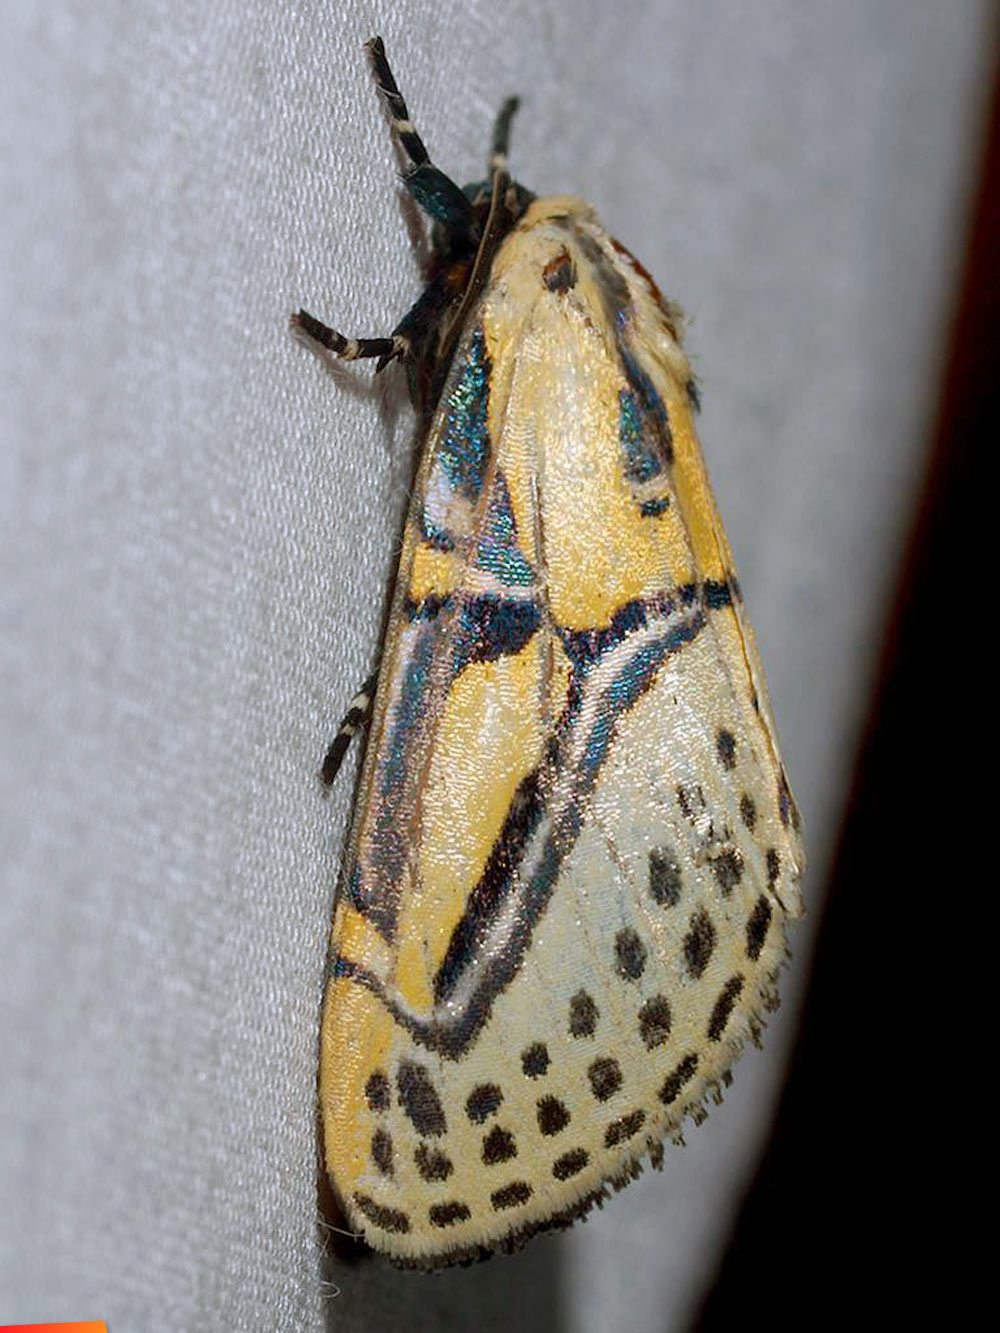 Hieroglyphic Moth, Diphthera festiva